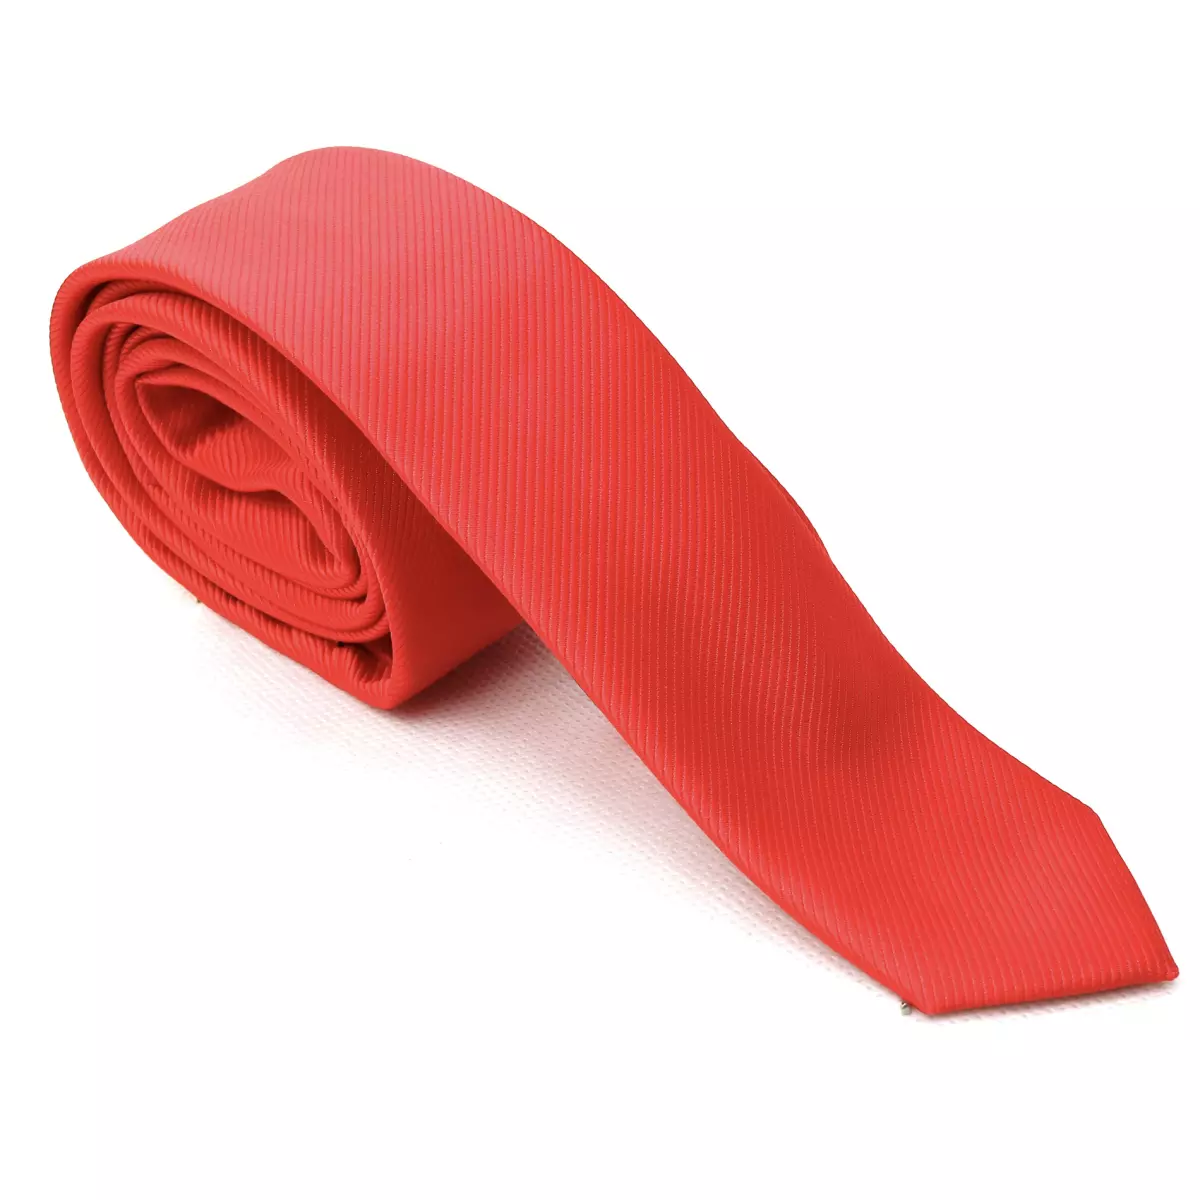 Kravata pánská červená s texturou